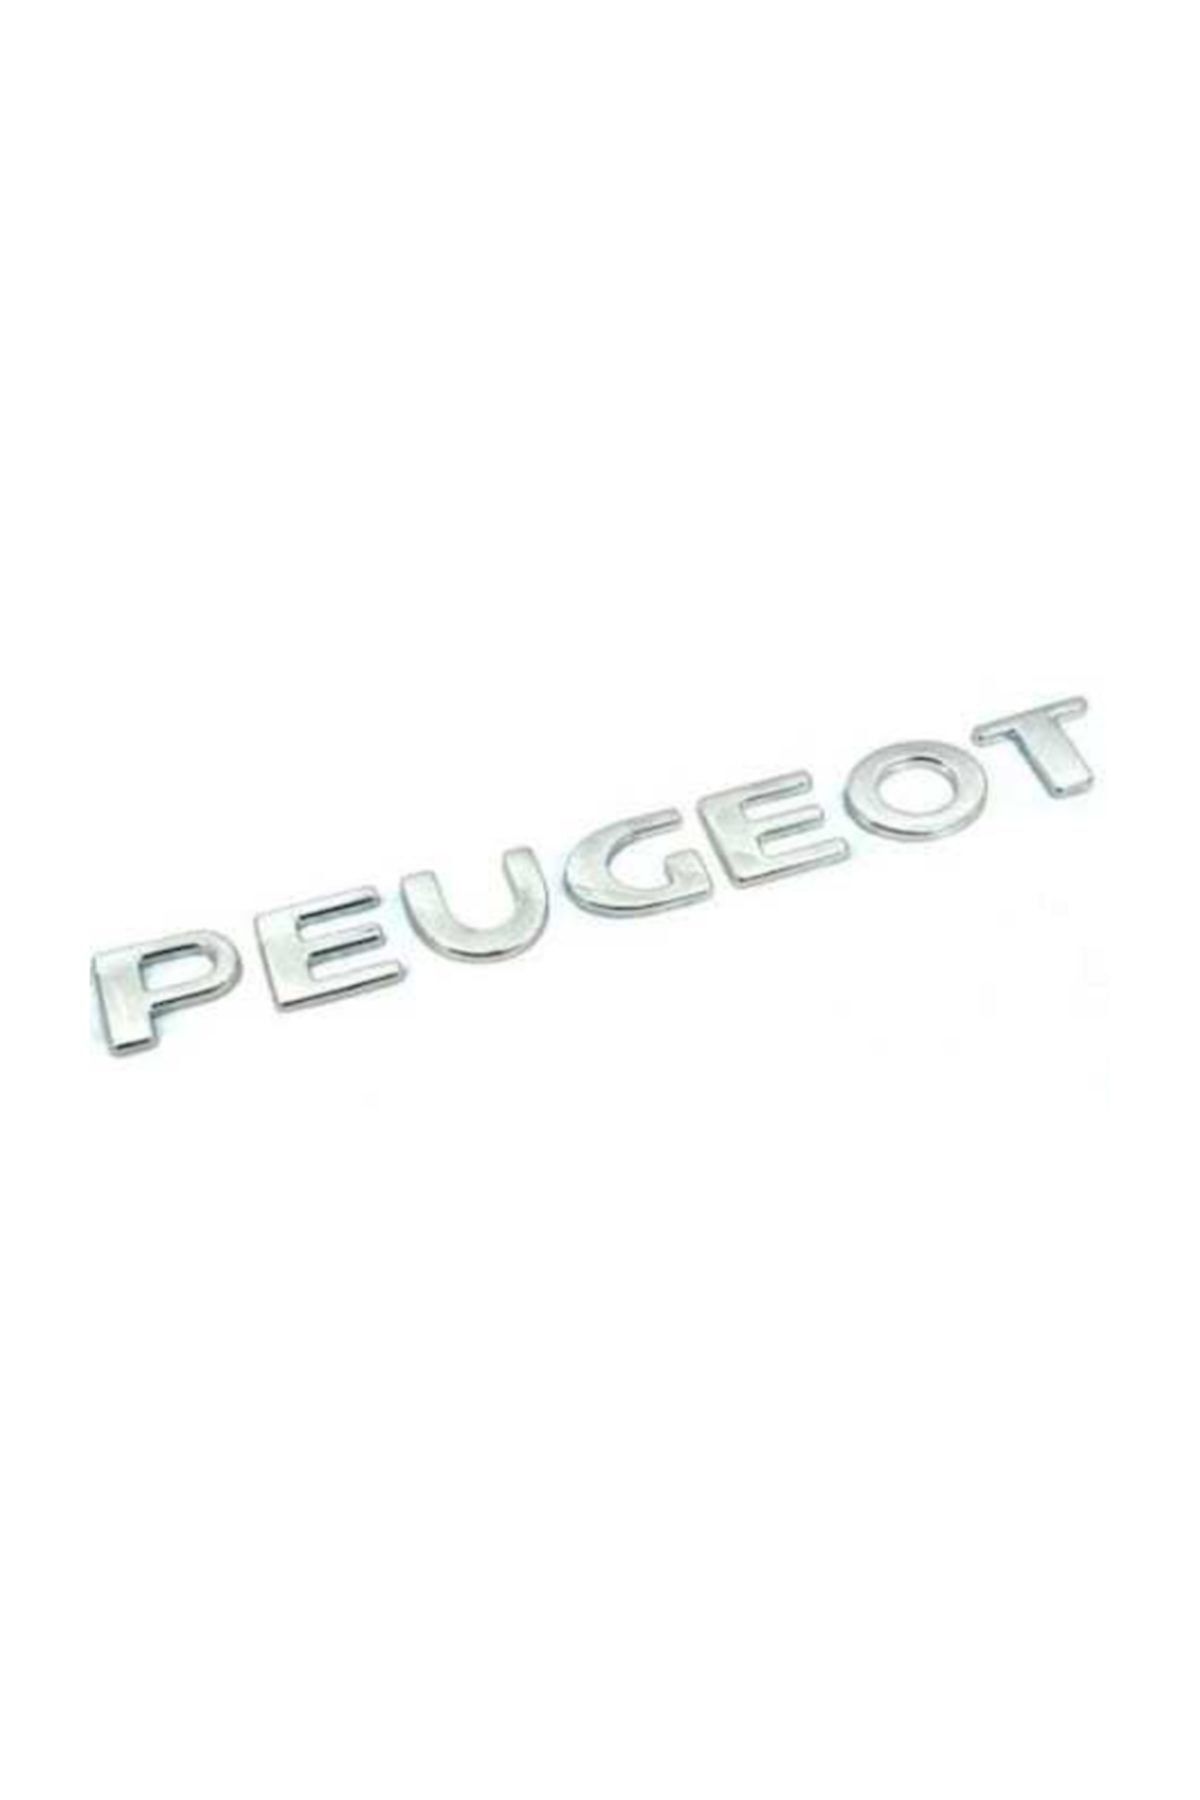 AÇIK OTOMOTİV Peugeot 307 Bagaj Kaputu Peugeot-307-aslan Arma Yazı Seti